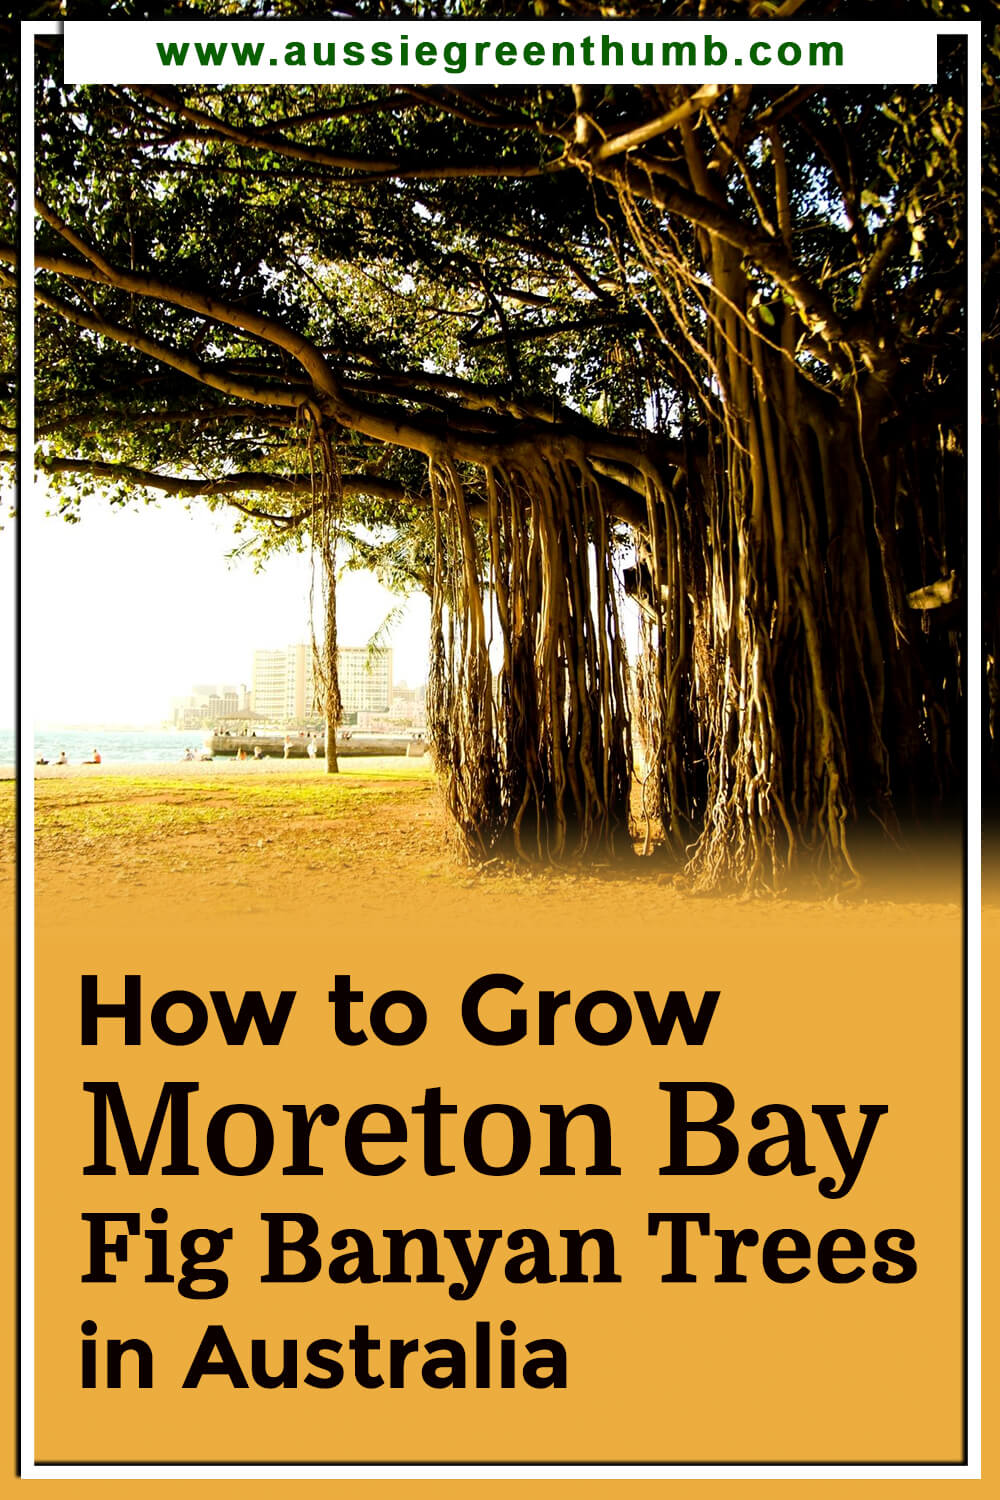 How to Grow Moreton Bay Fig Banyan Trees in Australia